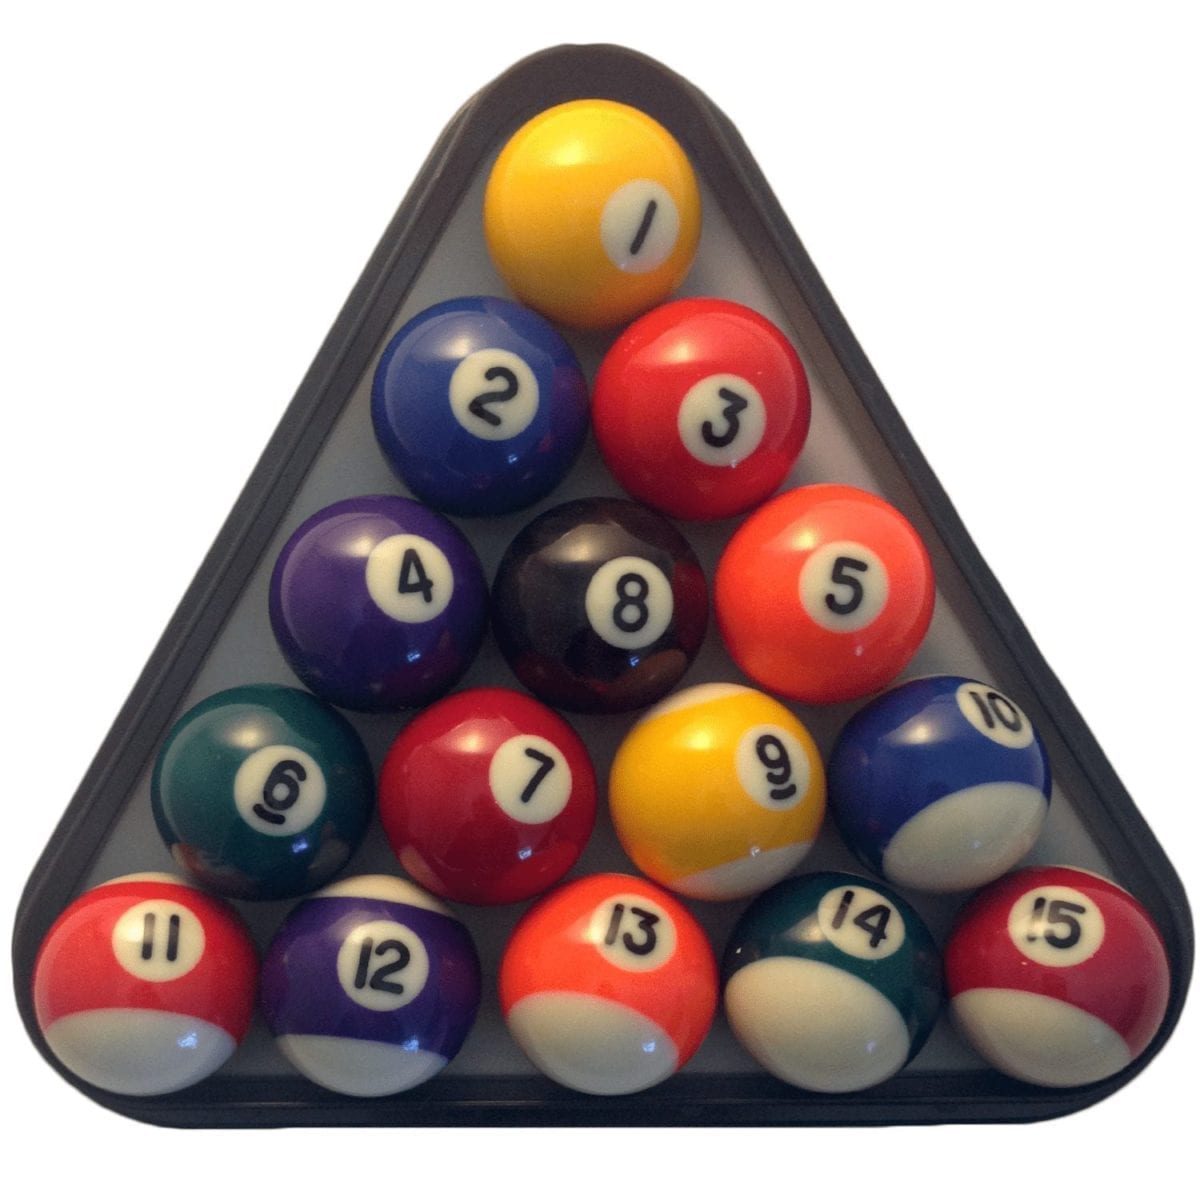 Utility 8 Ball Pool Billiard Table Rack Triangle Plastic RUandard Size new UK 